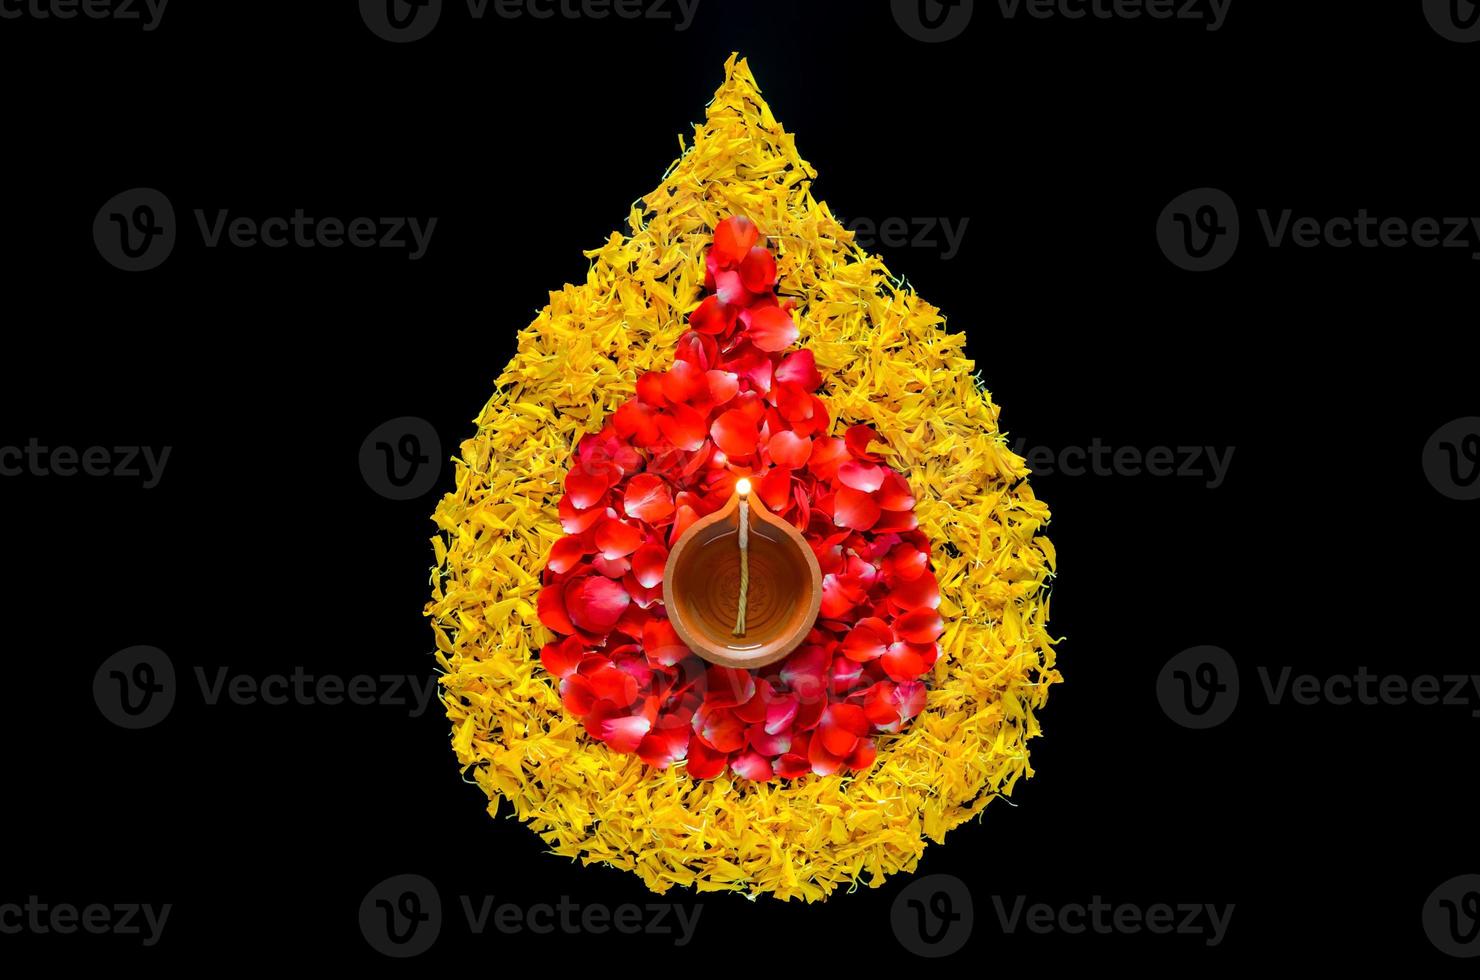 decoratief goudsbloem en roos bloem bloemblaadjes rangoli voor diwali festival met klei diya lamp lit met wazig focus vlam Aan zwart achtergrond. foto